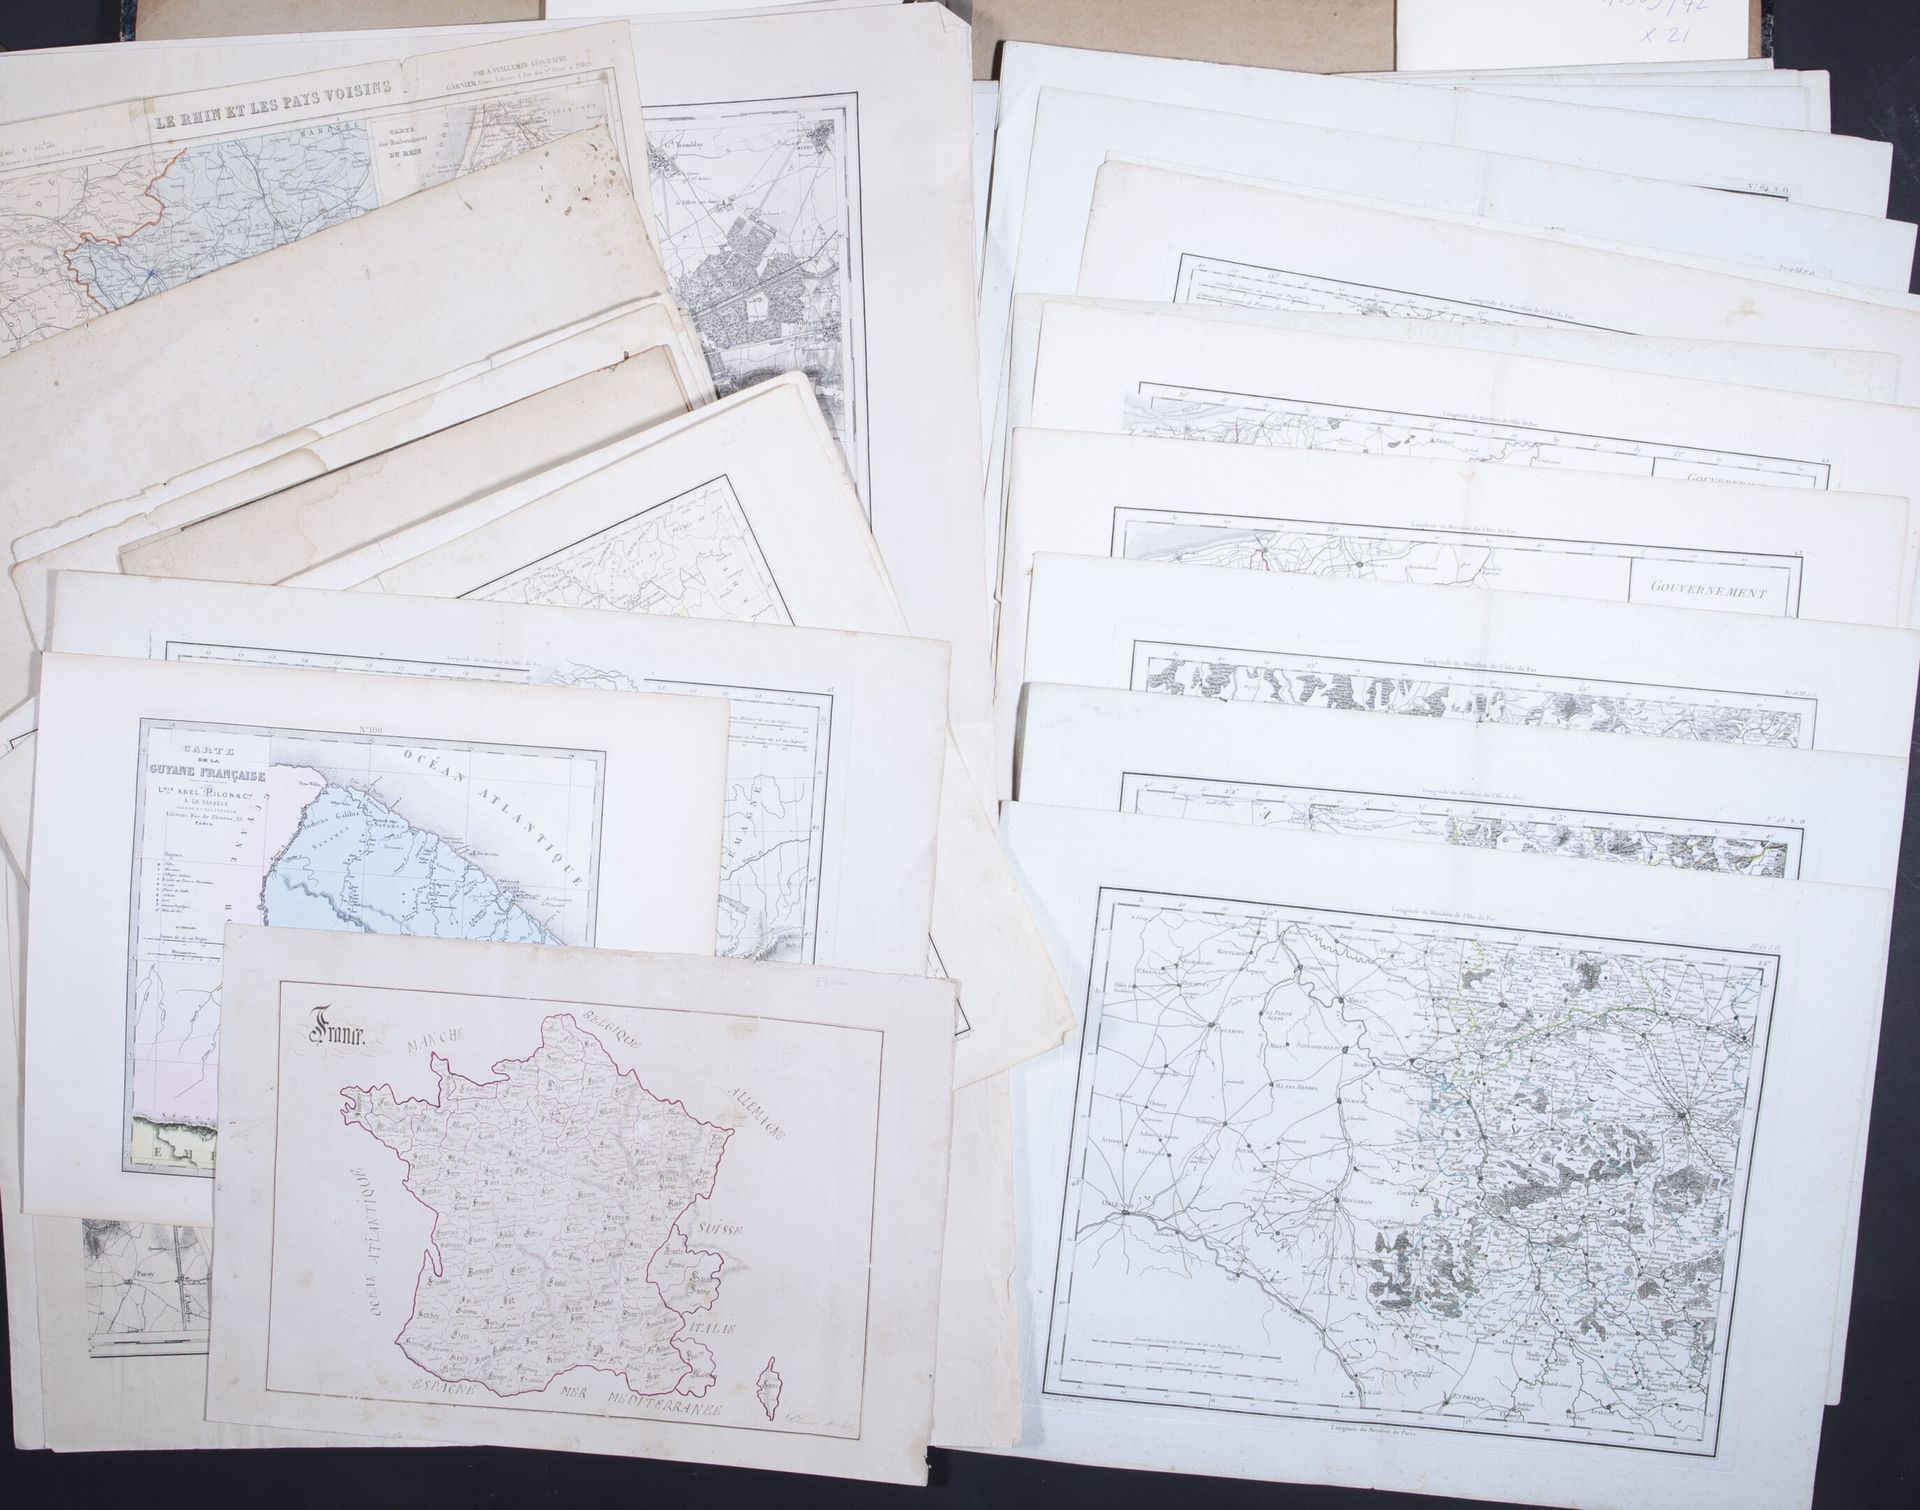 Null [制图学]

法国19世纪初，由21幅法国各省和荷兰的地图组成的拍品。

床单：41 x 56 cm AC

附上大约14张杂项地图。